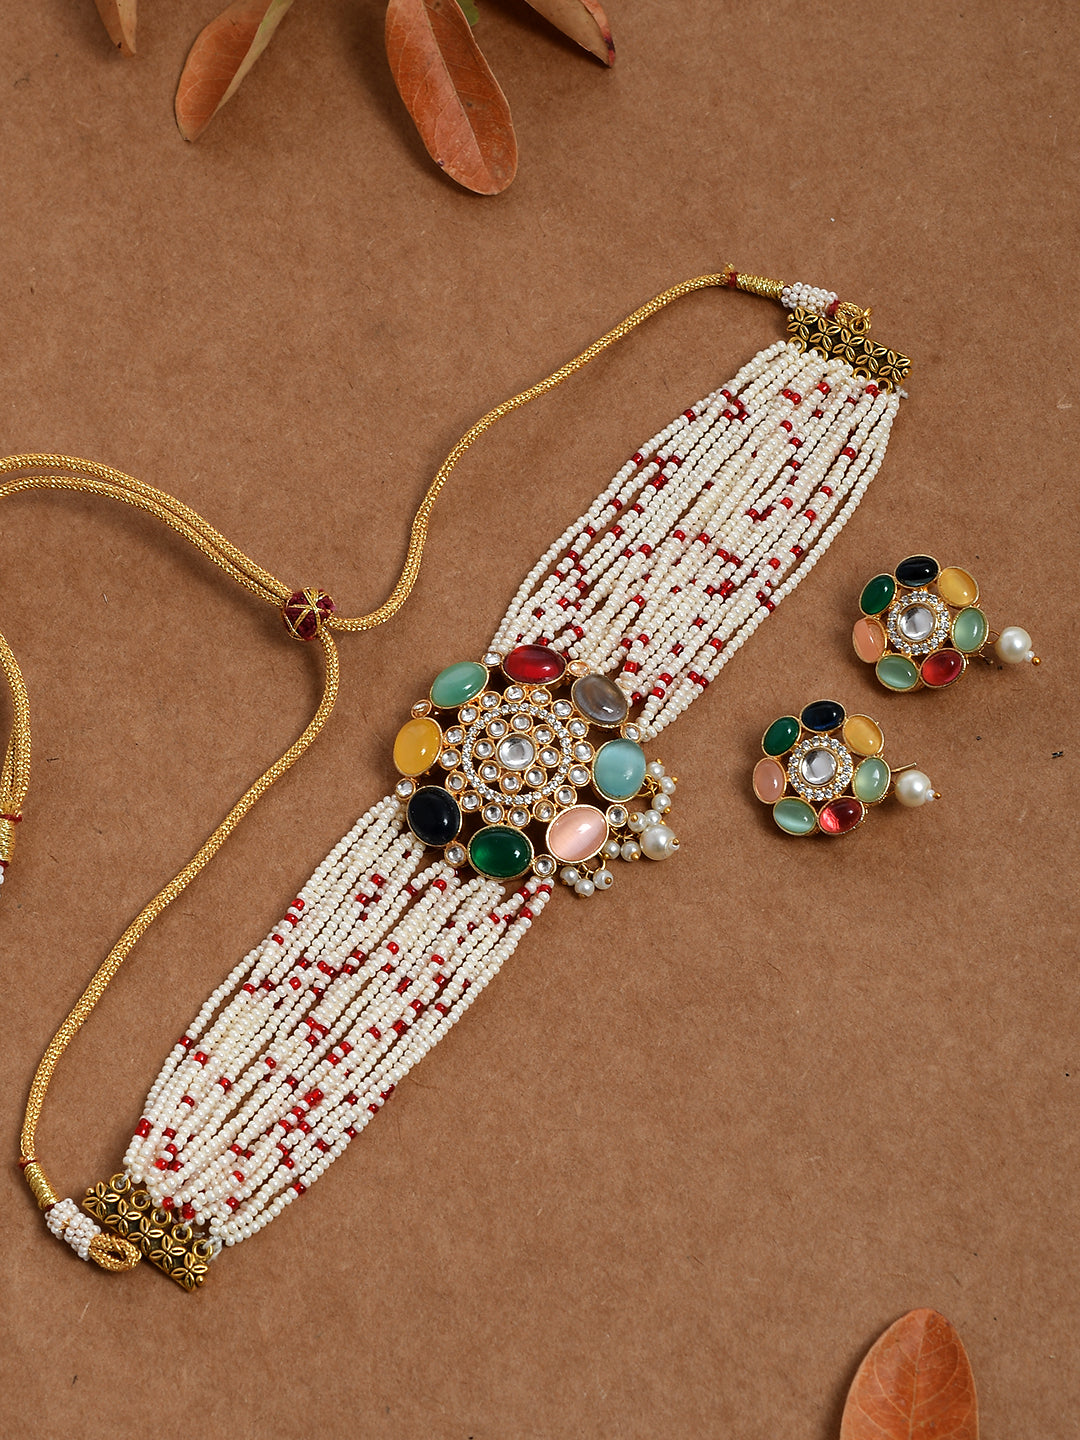 Ethnic Golden Cz Pearl Upper Arm Armlet Bracelet Indian Women Fashion  Jewelry | eBay